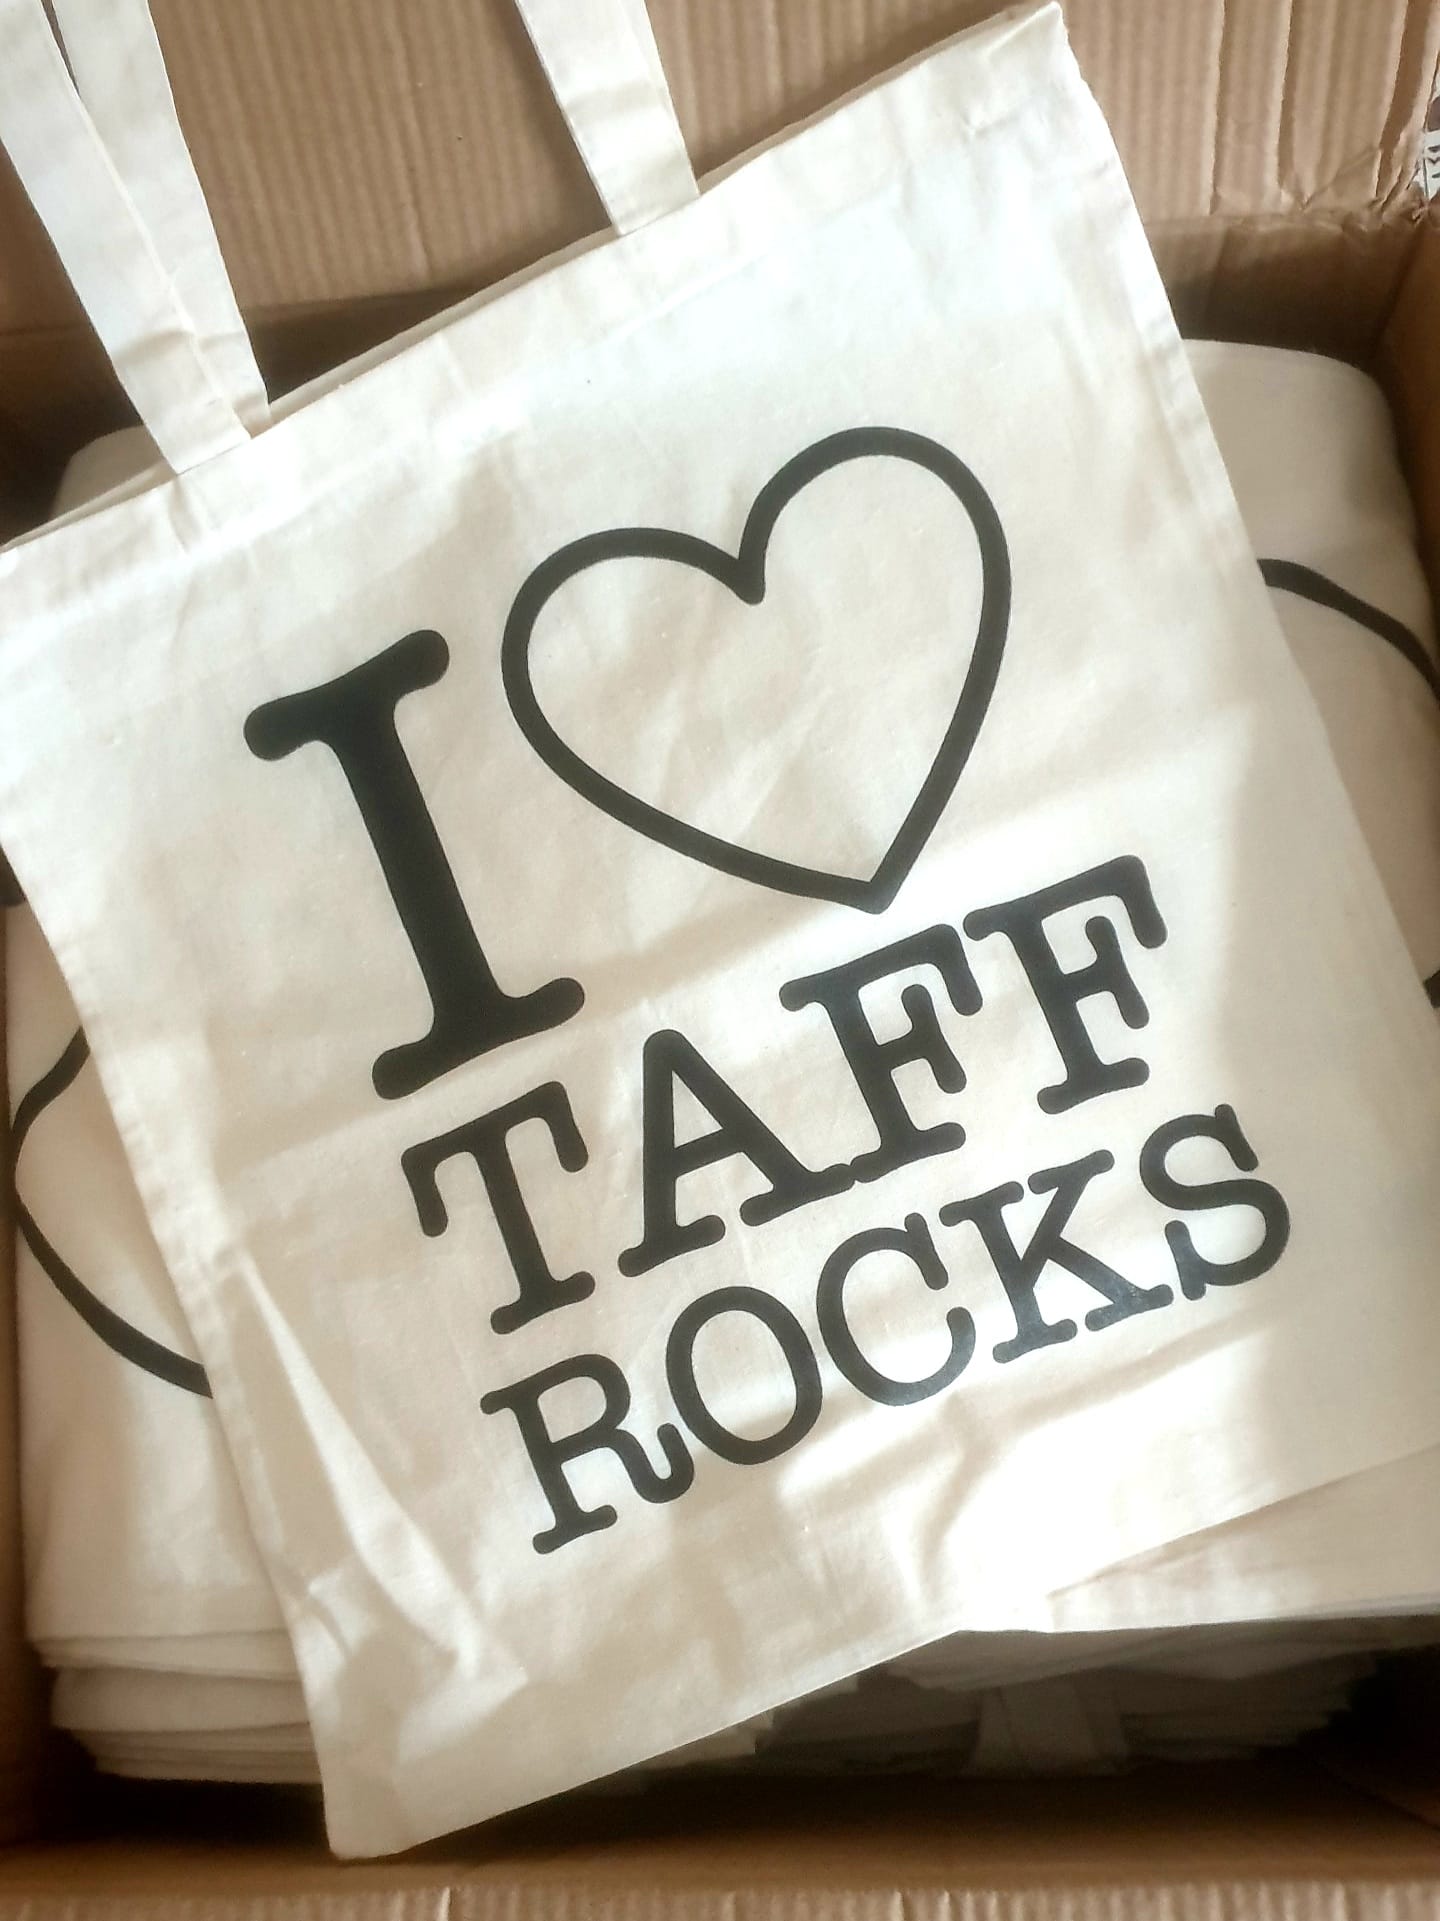 Taff Rocks tote bags